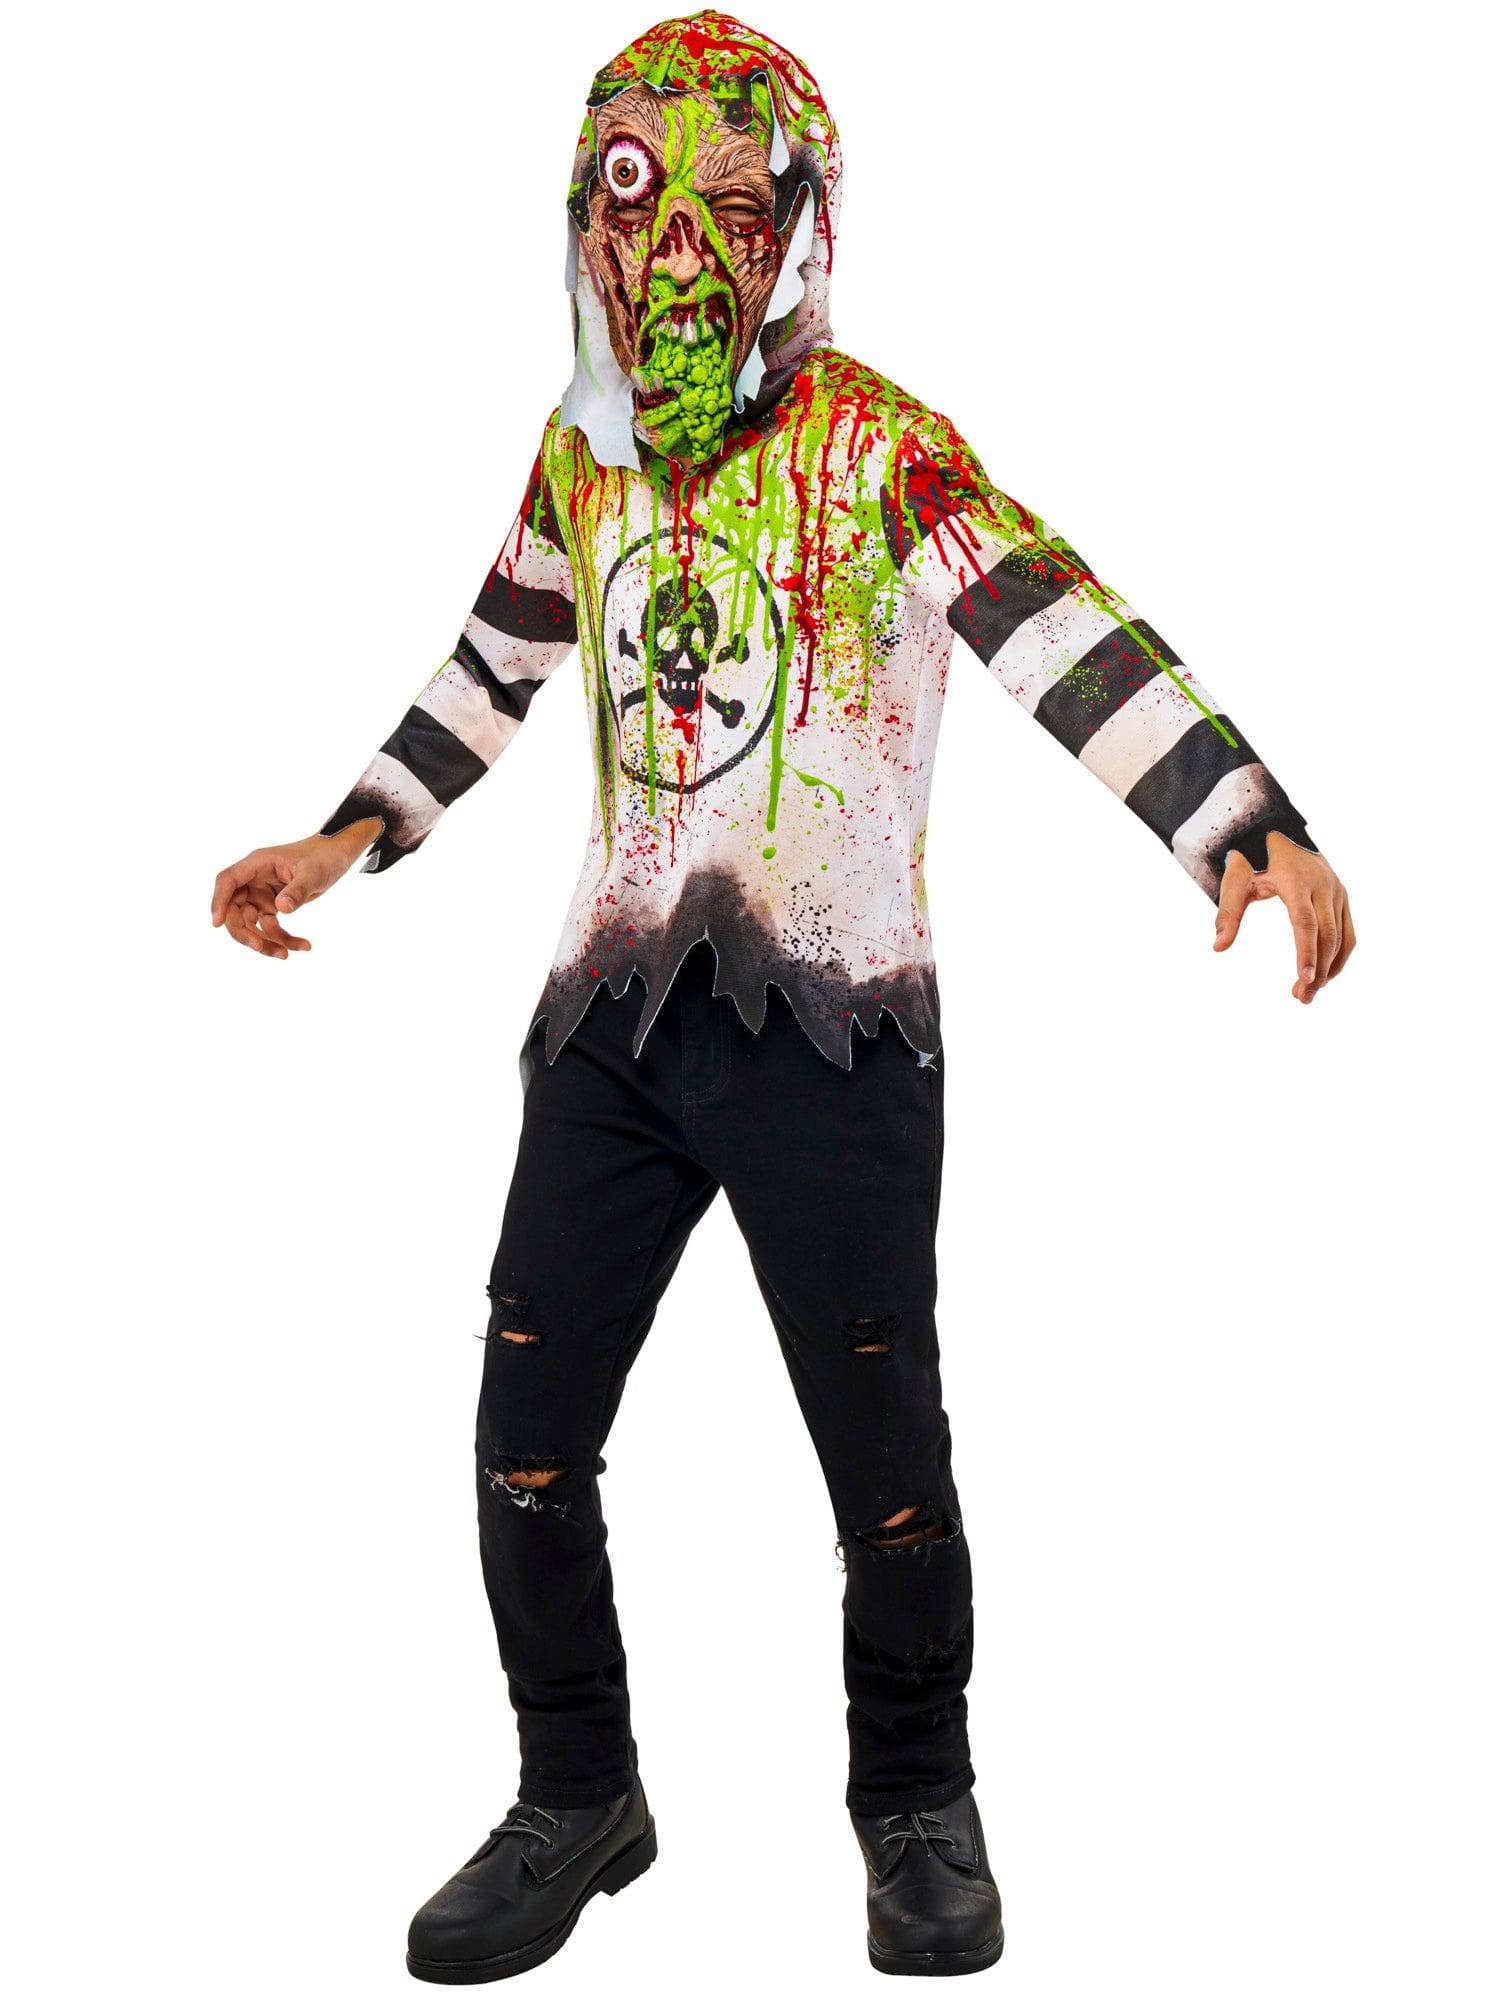 Toxic Kid Kids Costume - costumes.com